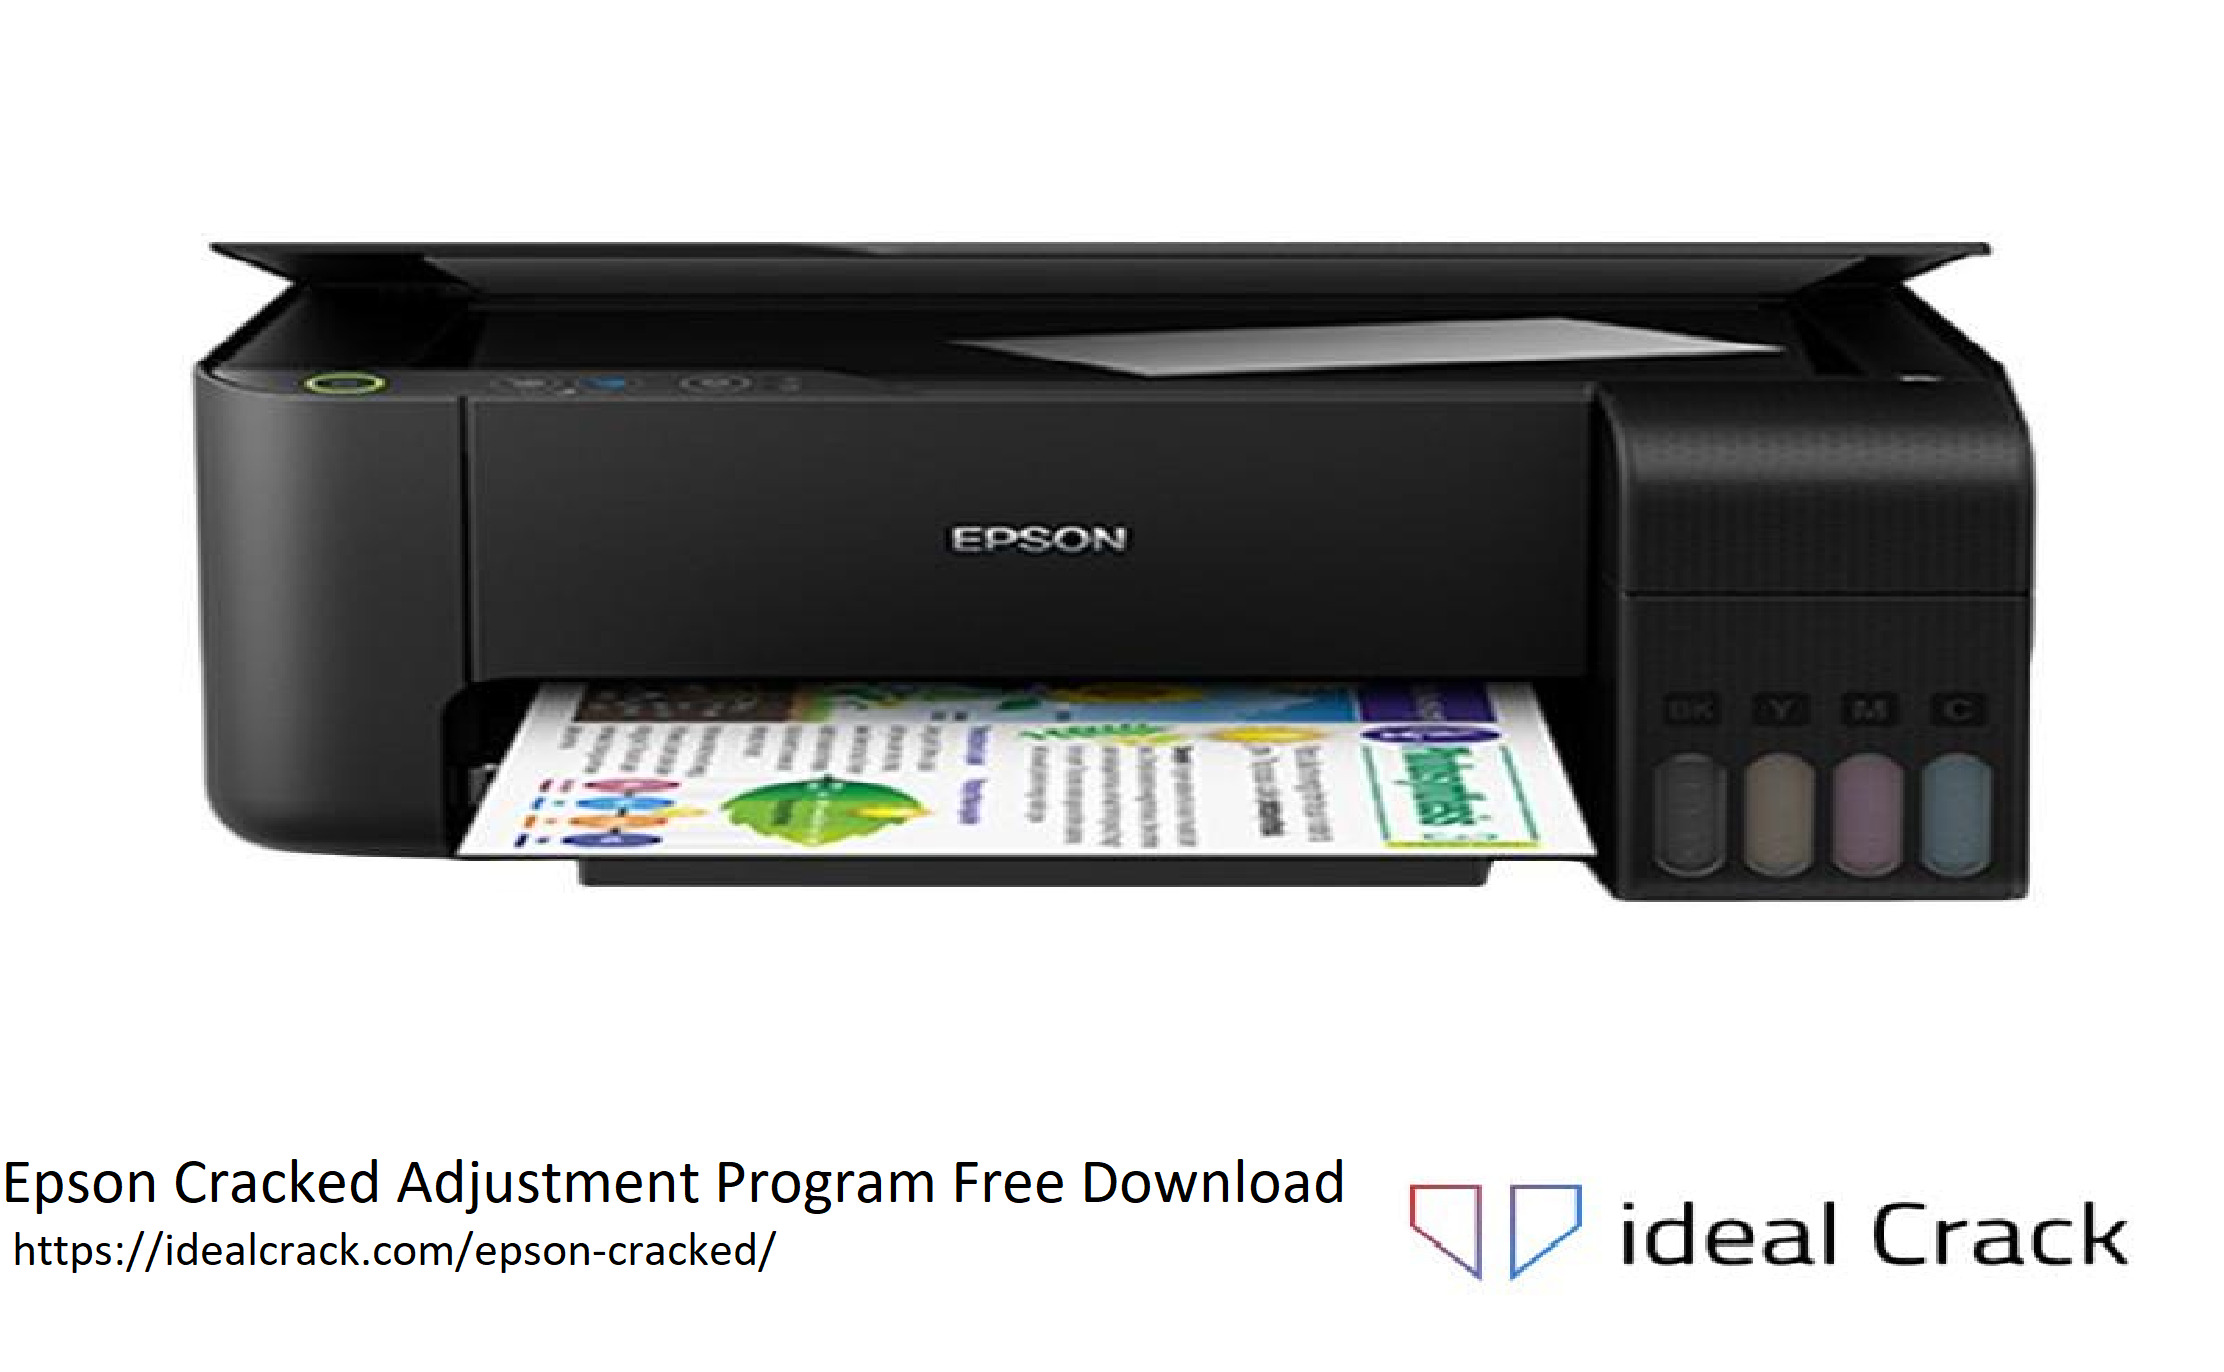 Epson Cracked Adjustment Program Free Download